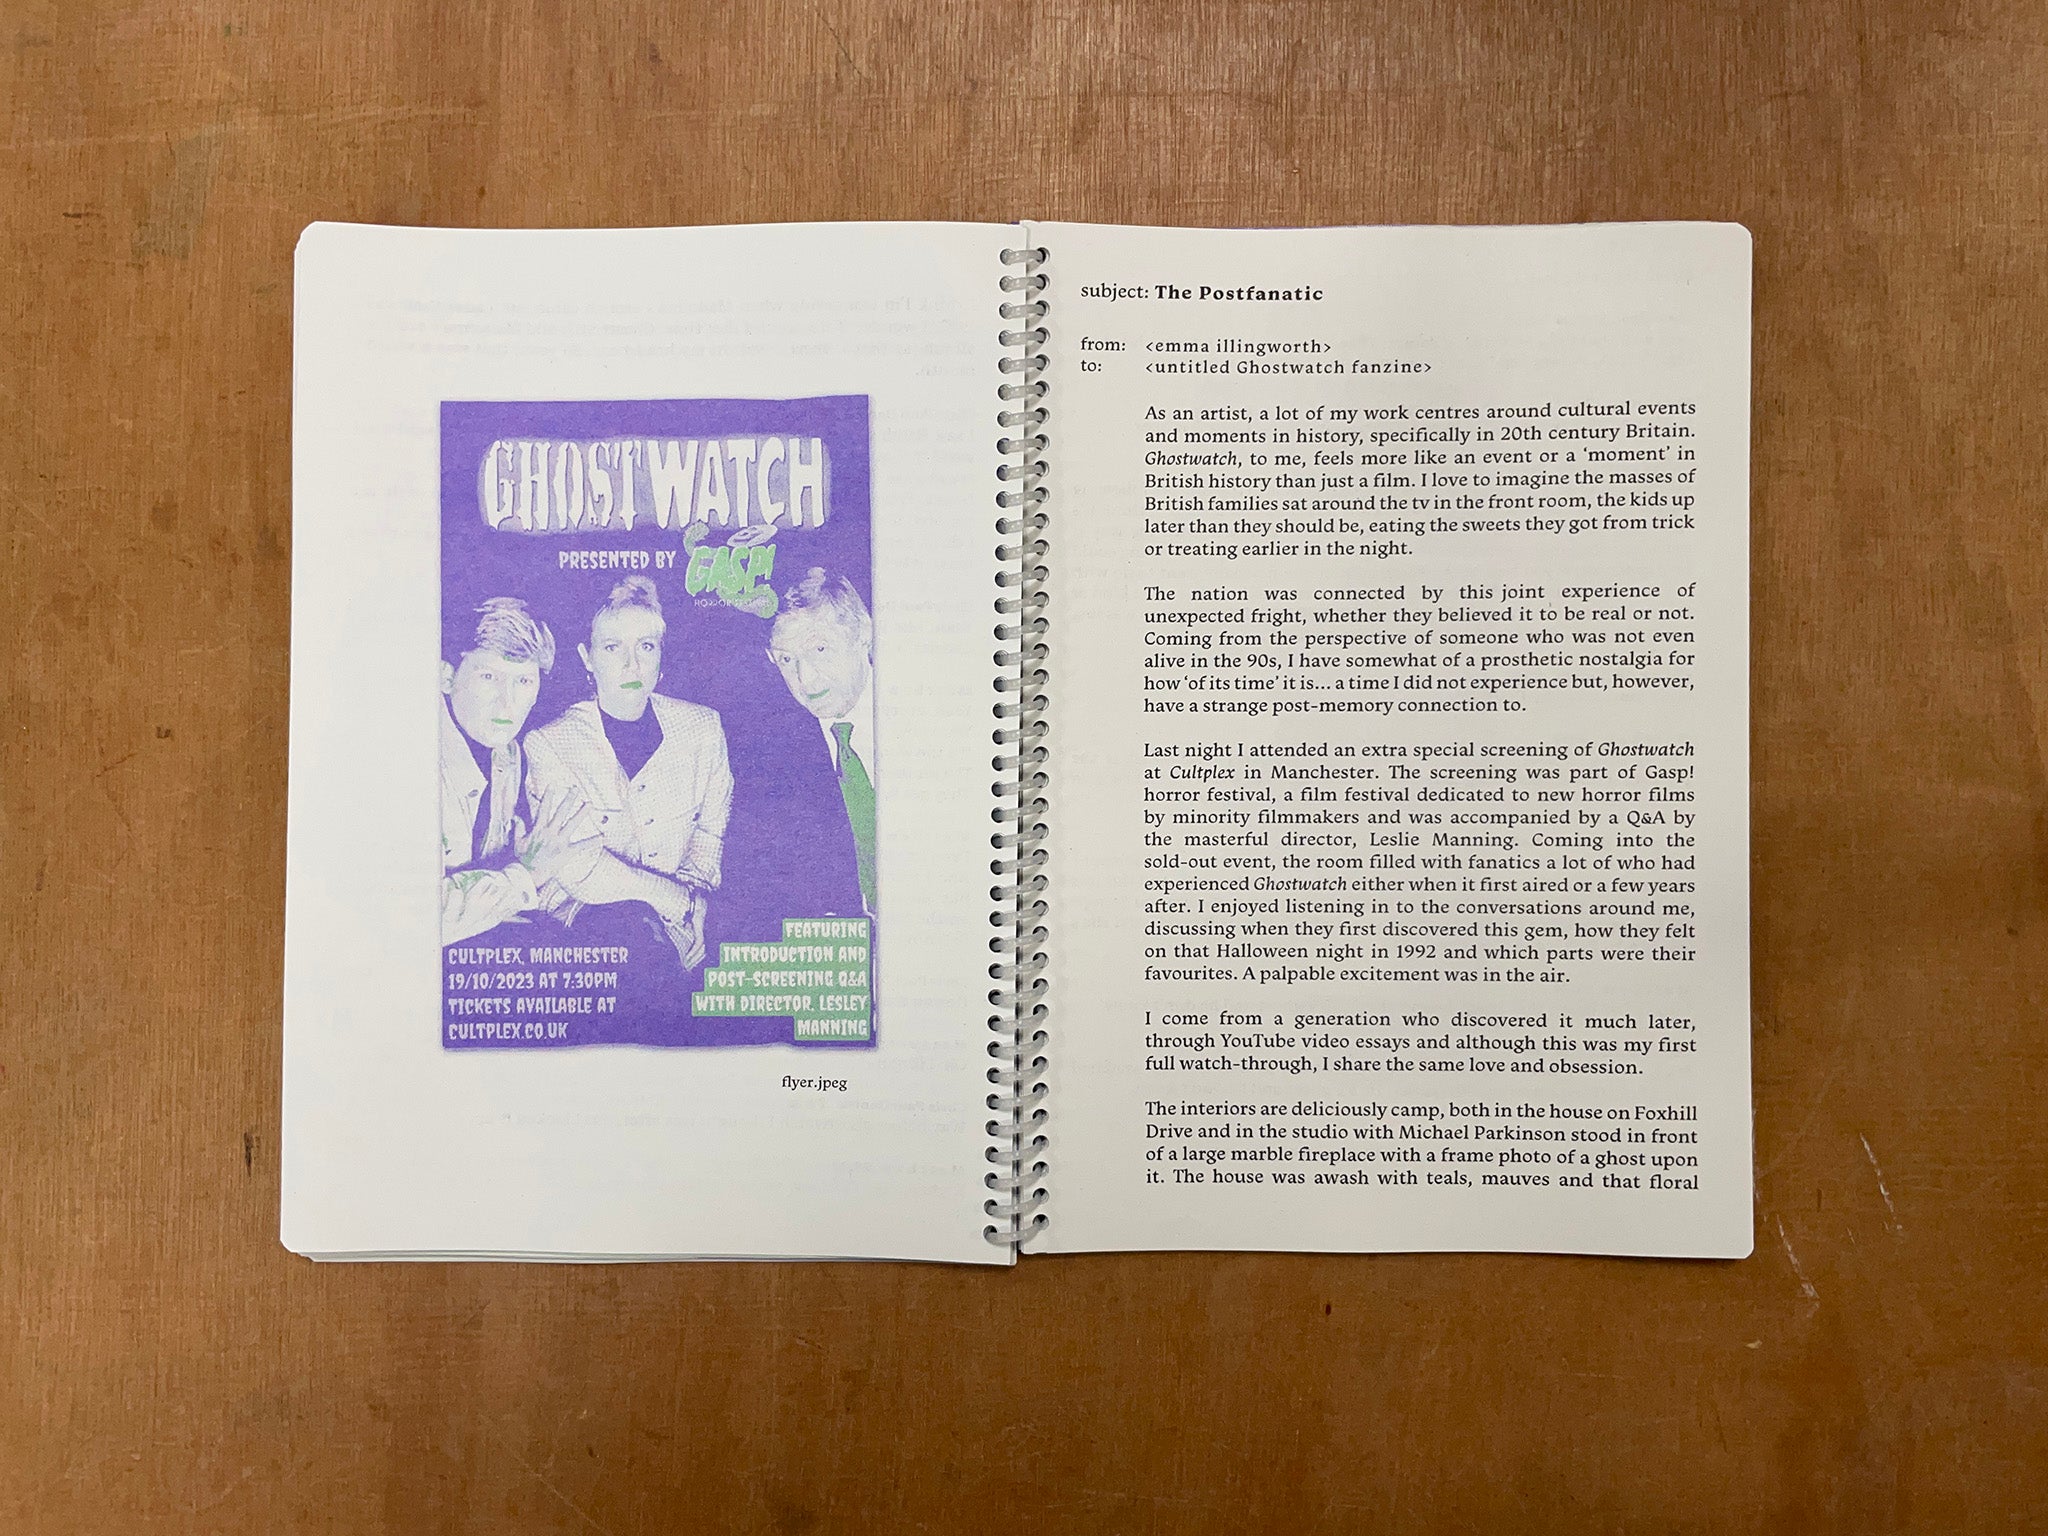 UNTITLED GHOSTWATCH FANZINE by George Gibson & Chris Paul Daniels